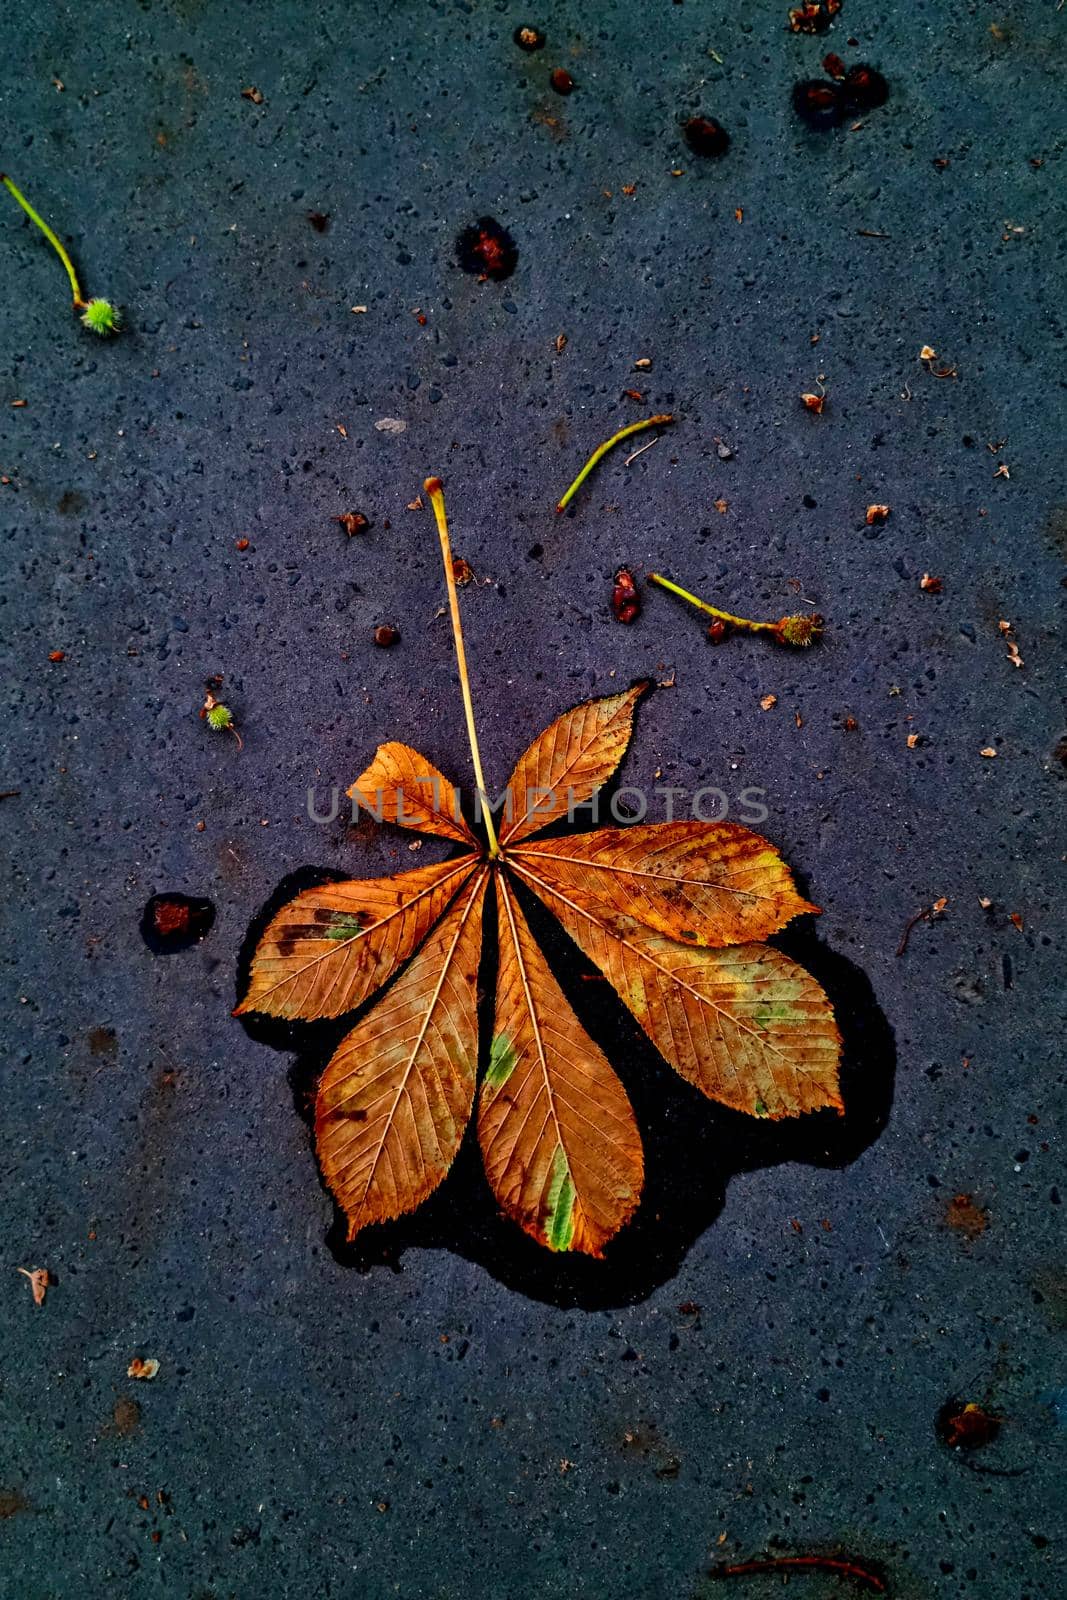 A fallen yellow chestnut leaf on the ground. Autumn background